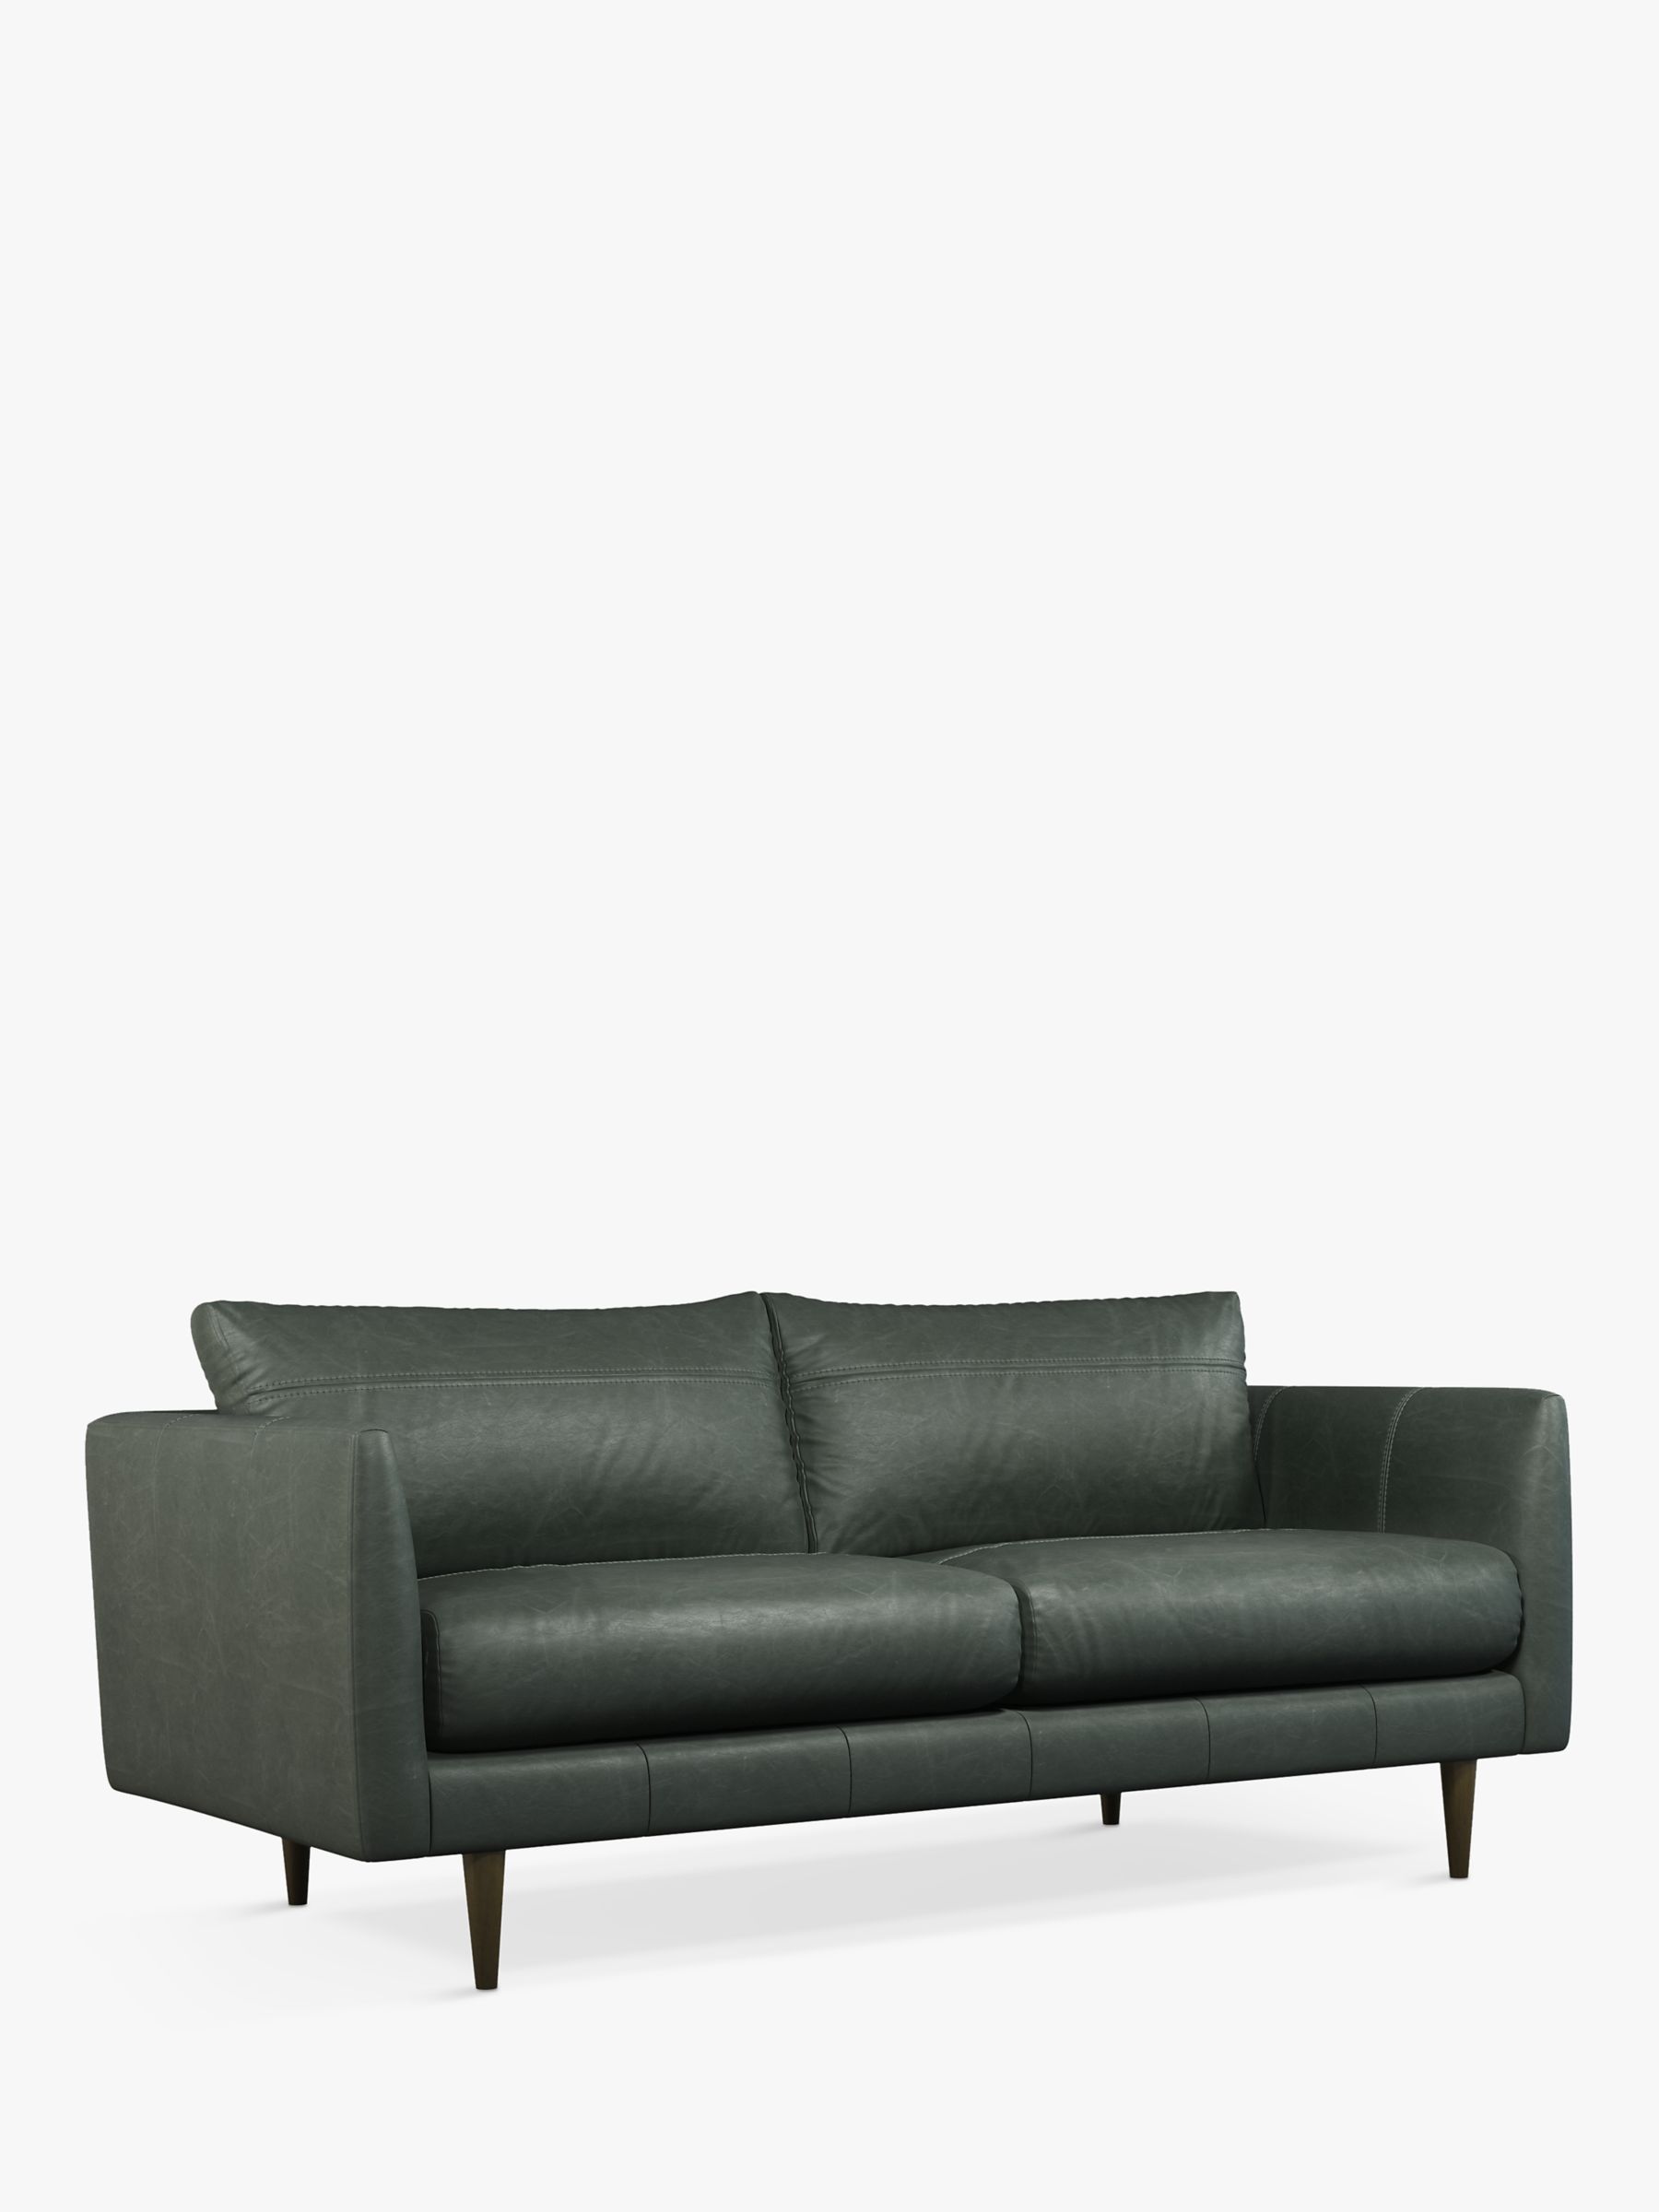 Latimer Range, John Lewis + Swoon Latimer Medium 2 Seater Leather Sofa, Sellvagio Green